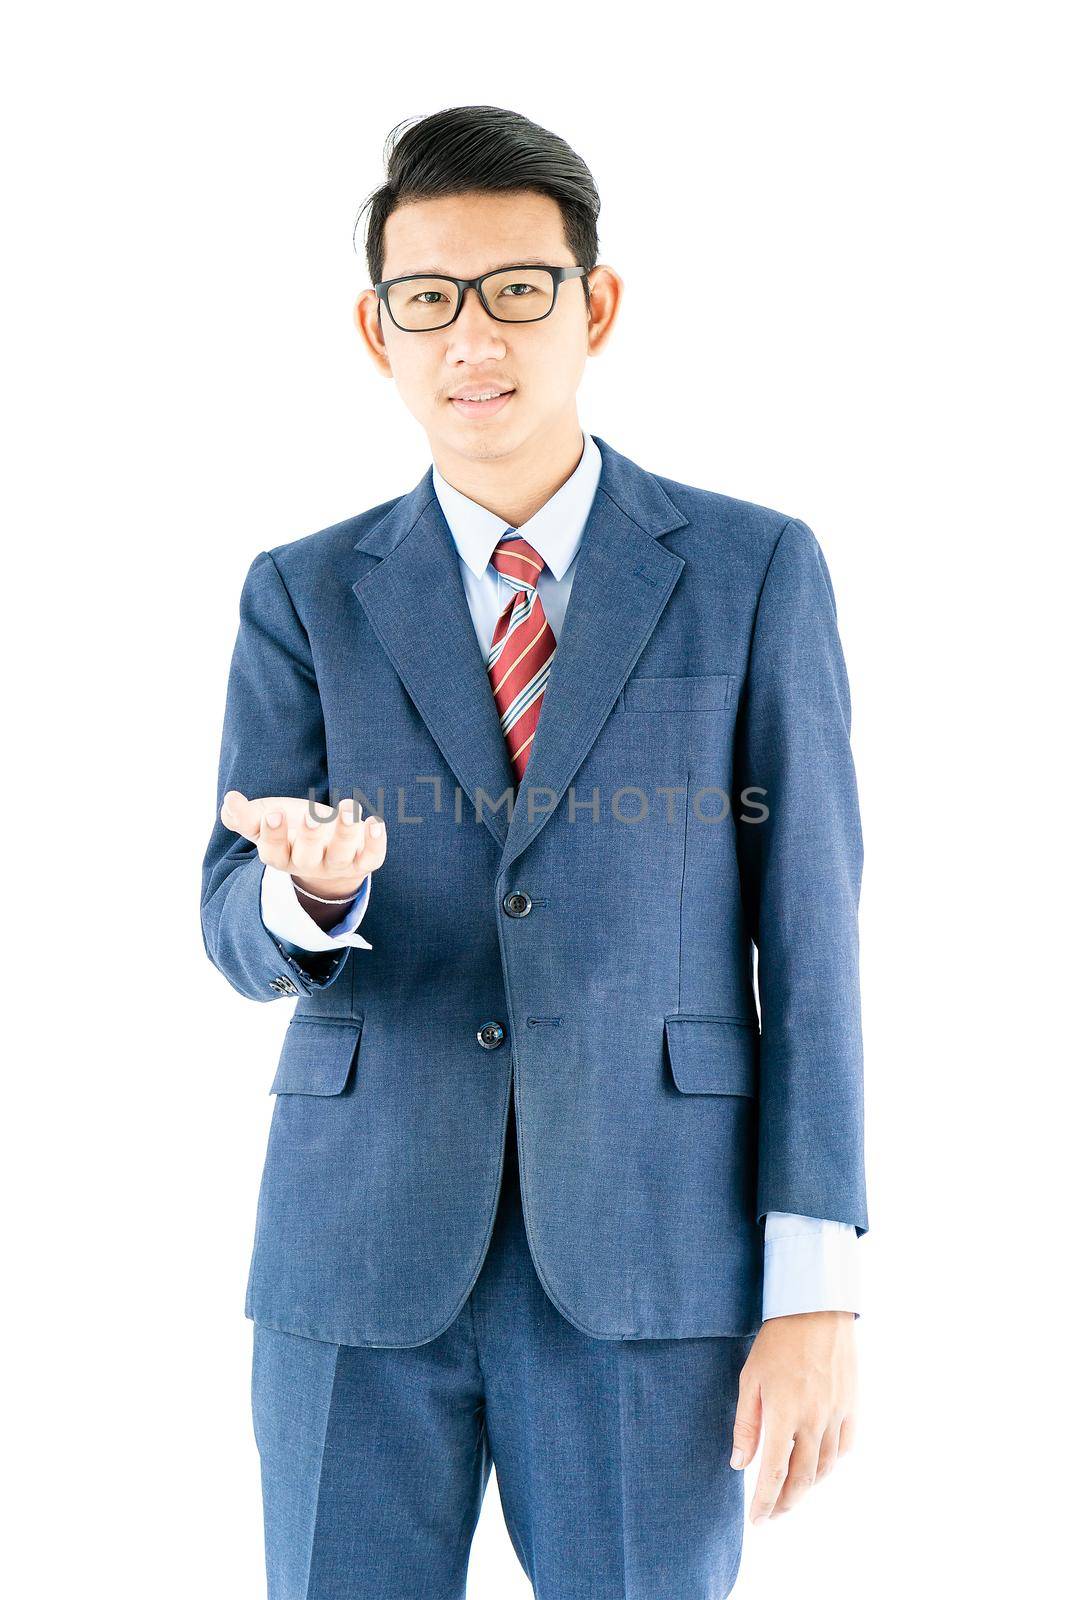 Businessman portrait in suit and wear glasses by stoonn